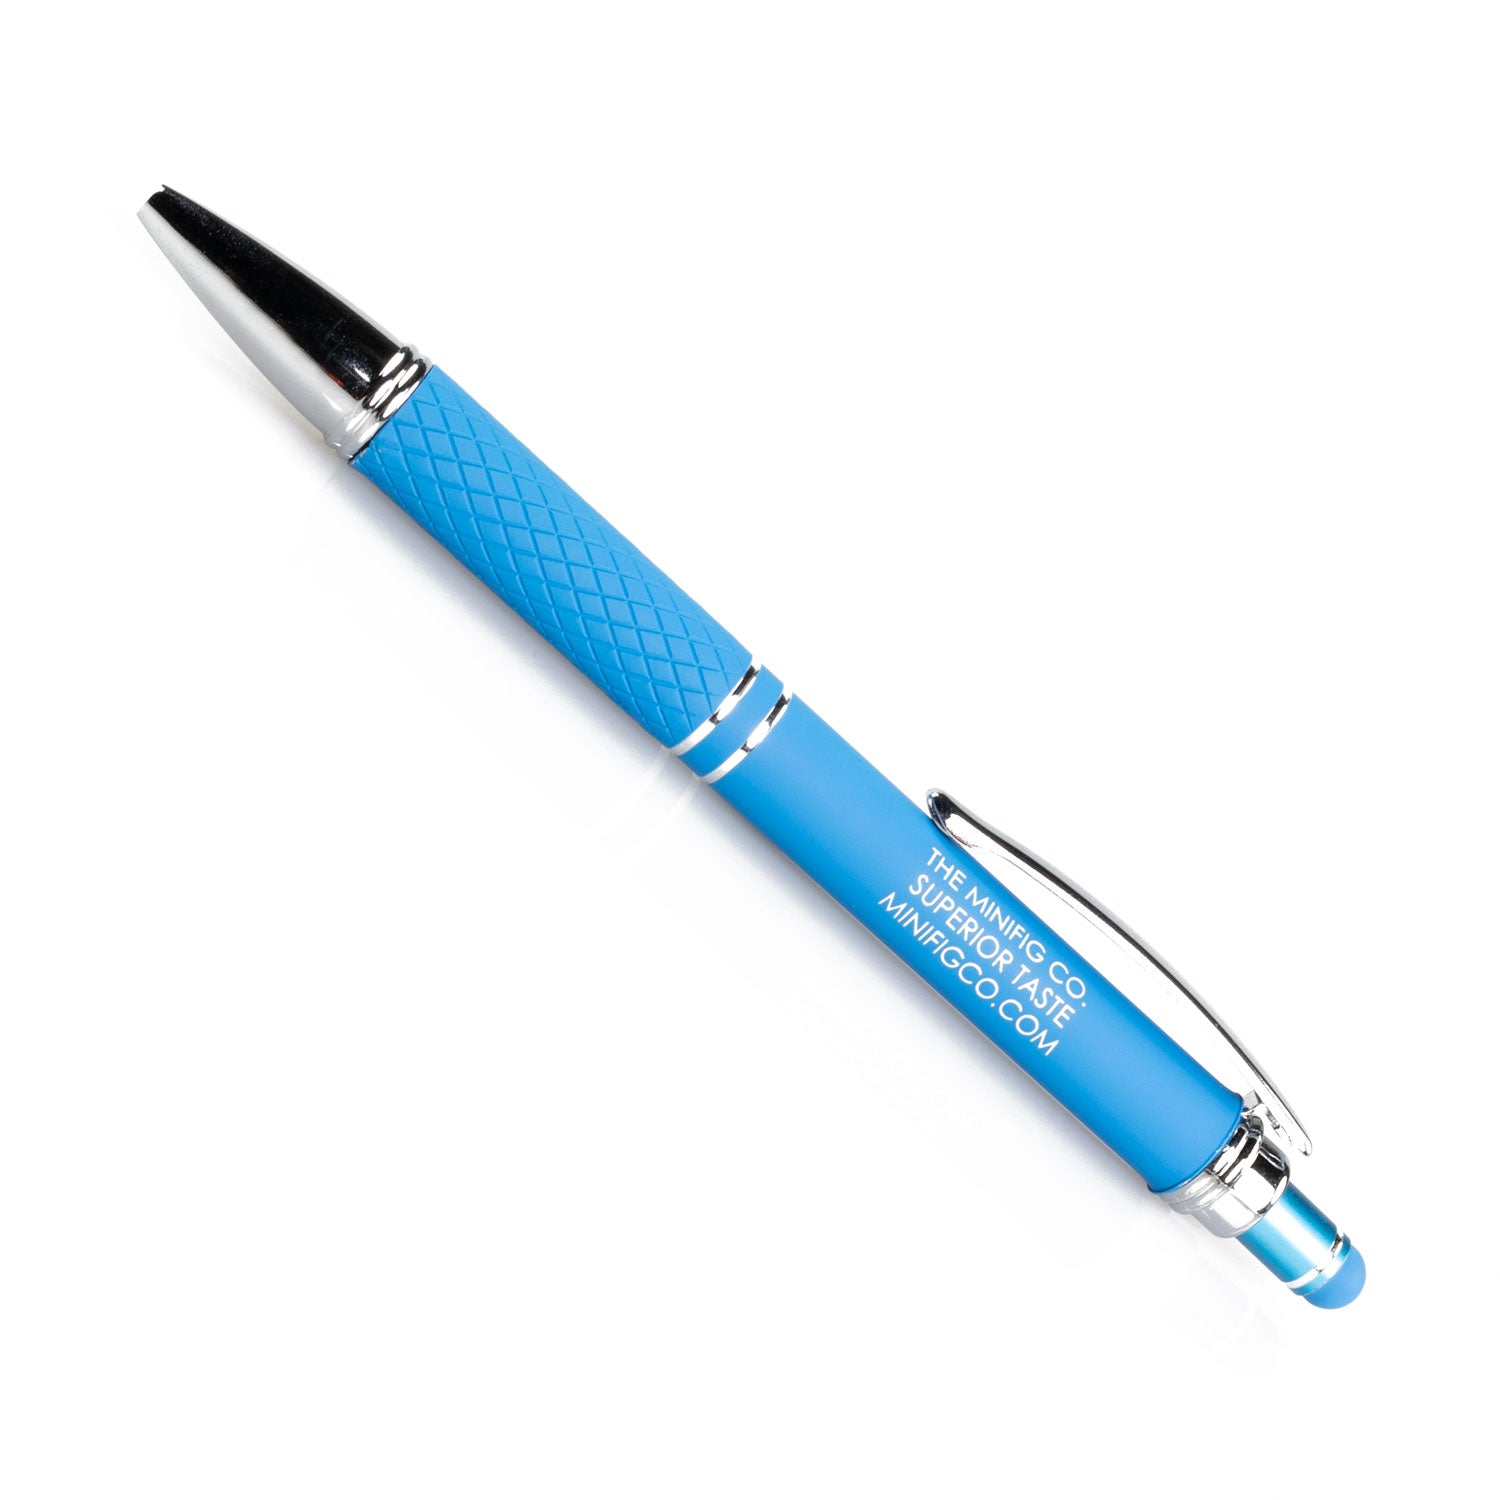 TMC Brand Pen - The Minifig Co.